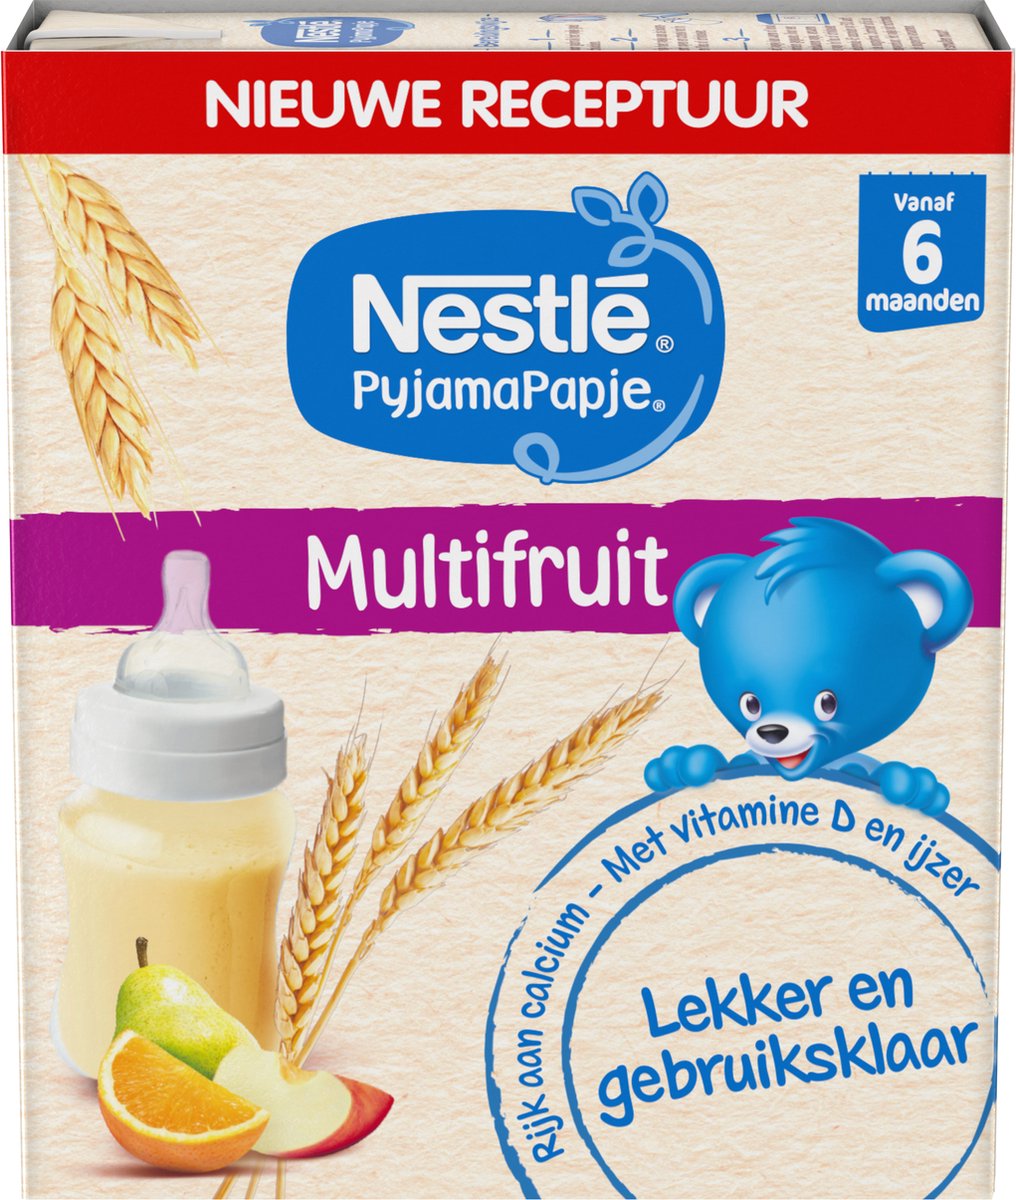 Nestlé PyjamaPapje Multifruit - Babyvoeding Babypap 6+ maanden - 6 stuks  2x250ml | bol